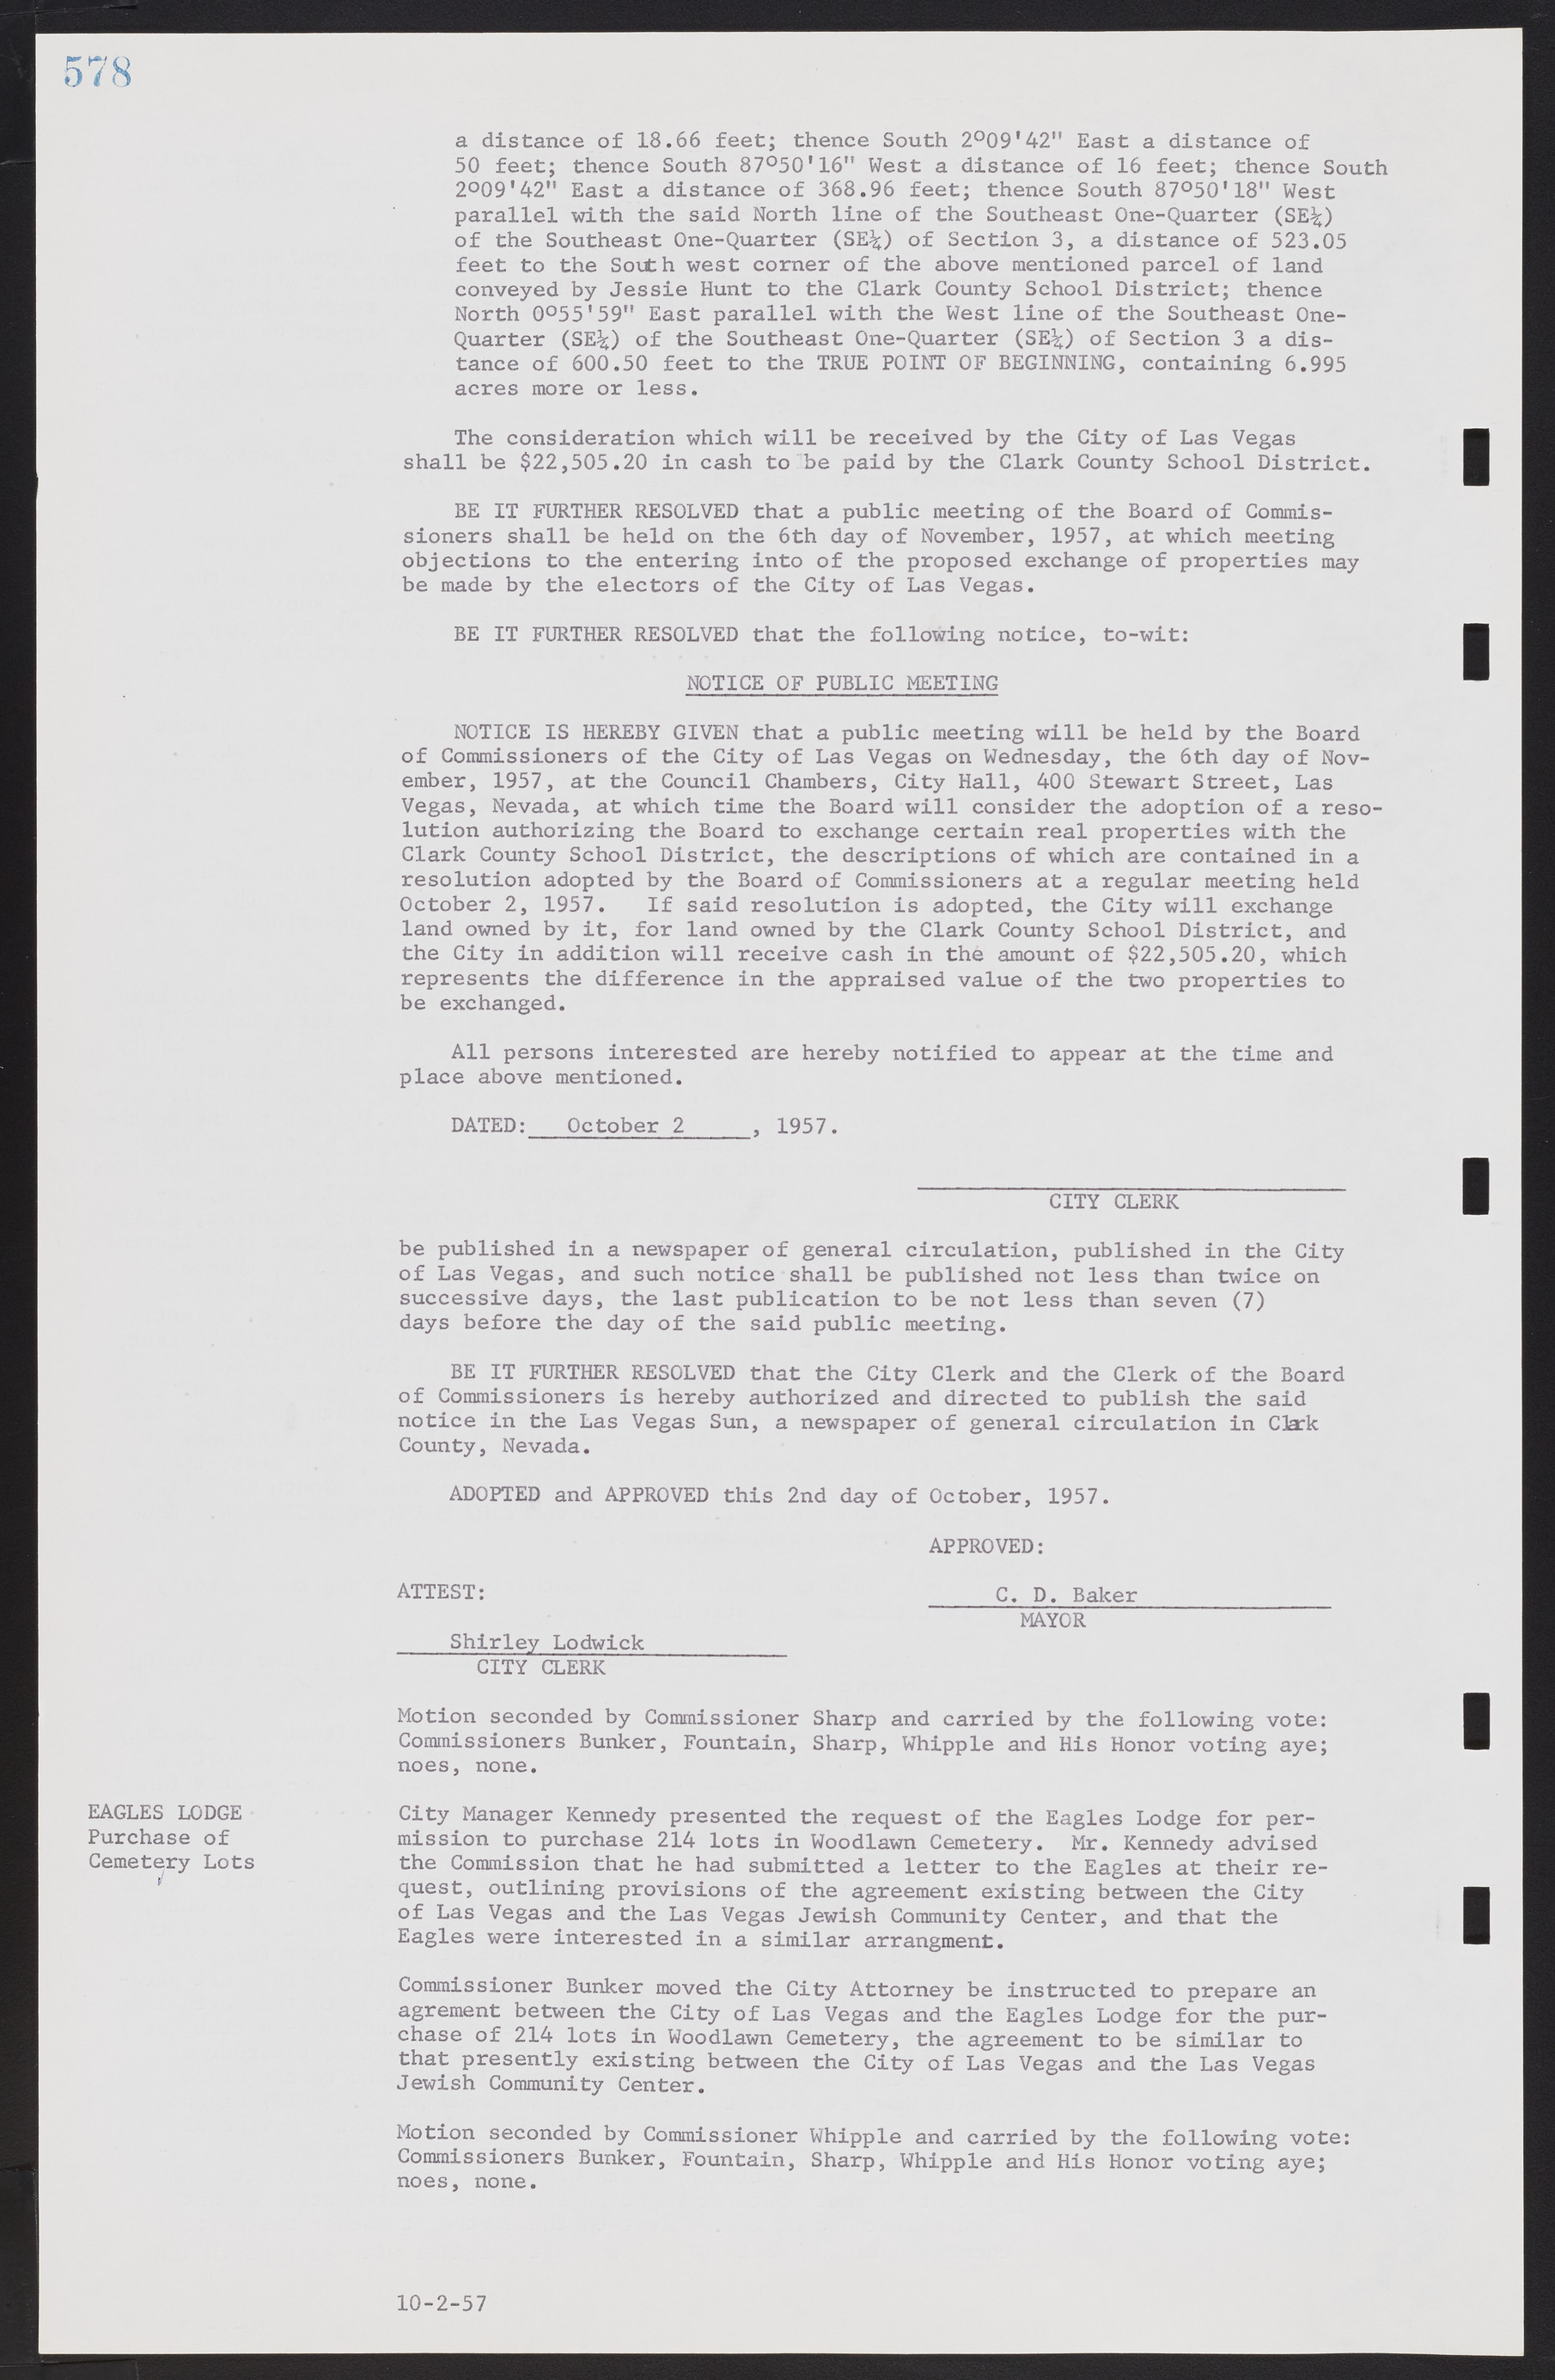 Las Vegas City Commission Minutes, September 21, 1955 to November 20, 1957, lvc000010-598